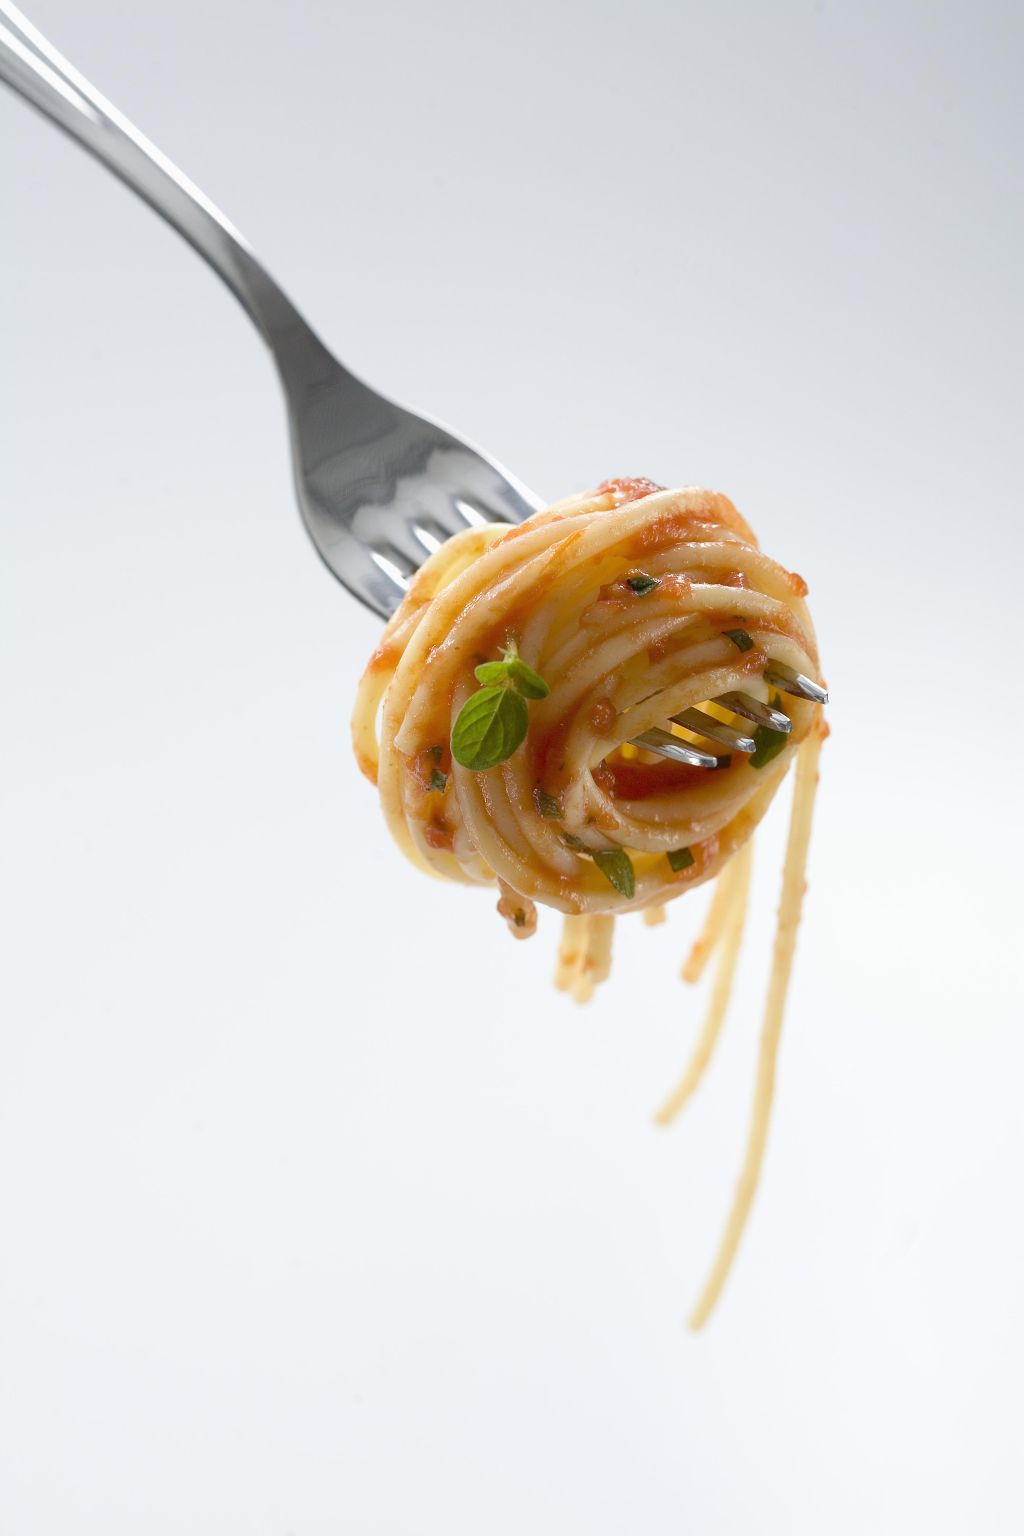 Spaghetti with sauce wound around fork, close-up, studio shot